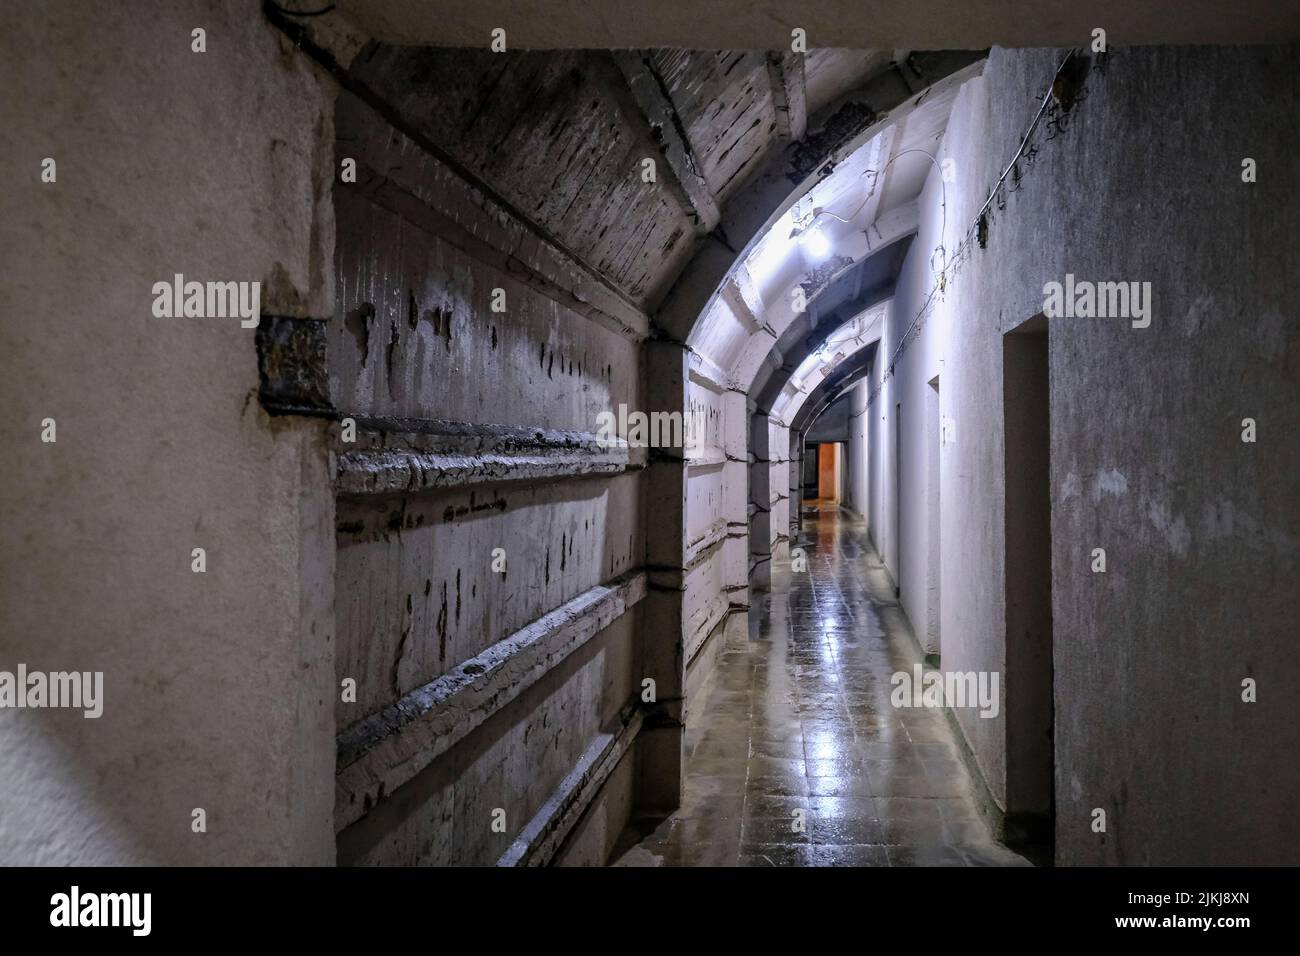 City of Gjirokastra, Gjirokastra, Albania - The Cold War Tunnel, underground command bunkers of dictator Enver Hoxha. Mountain town of Gjirokastra, UNESCO World Heritage Site. Stock Photo